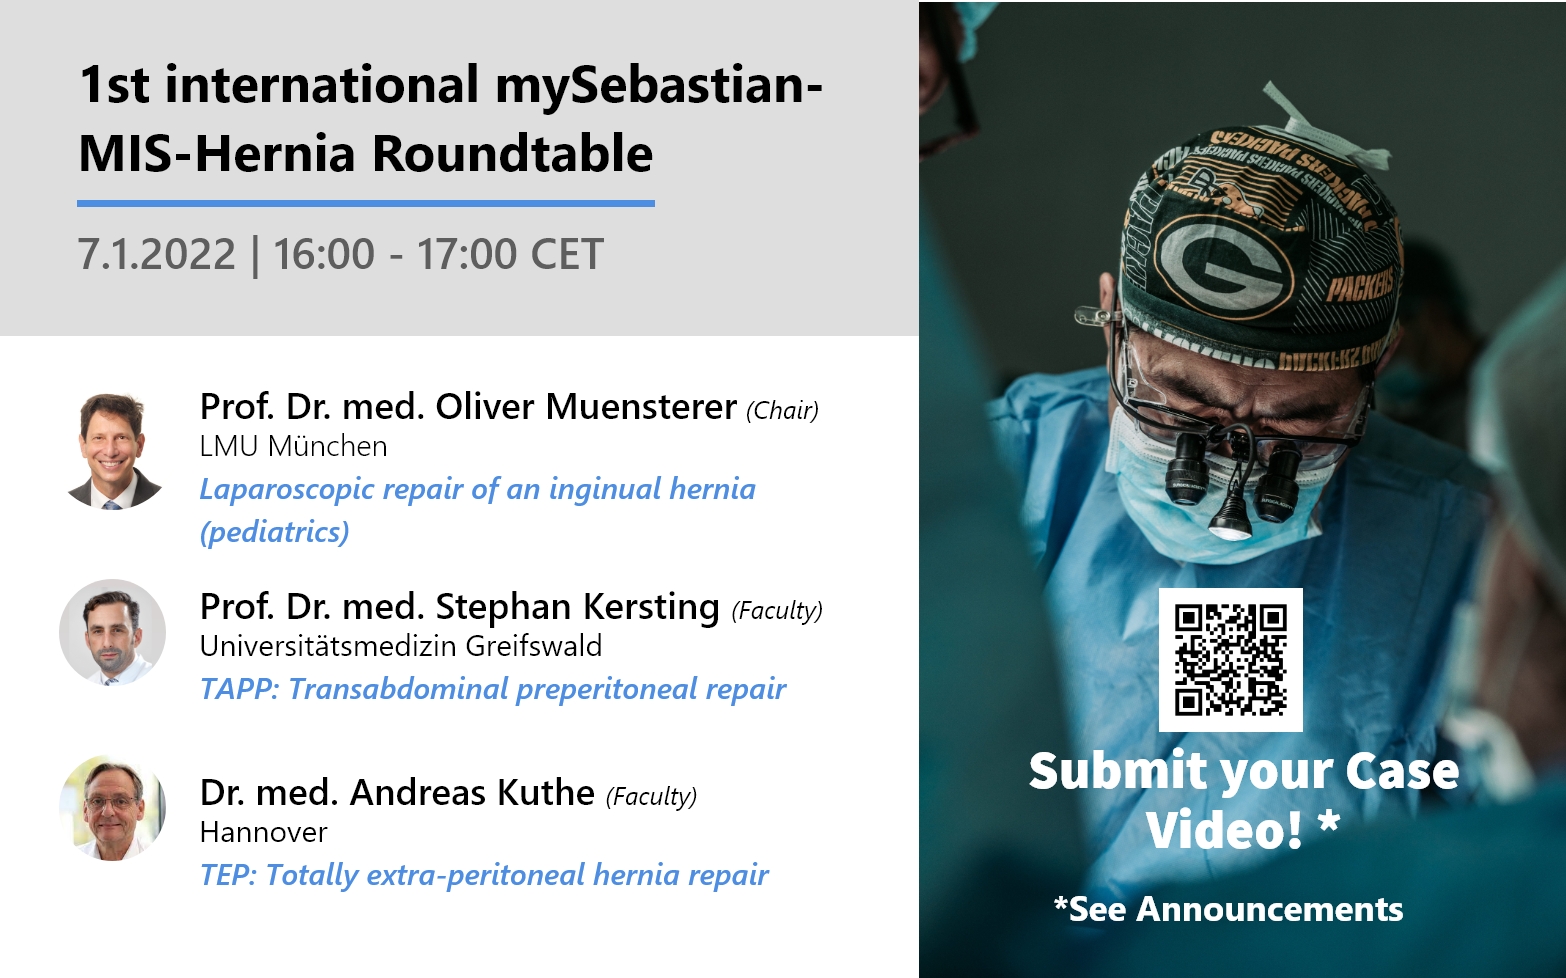 1st international mySebastian-MIS-Hernia Roundtable